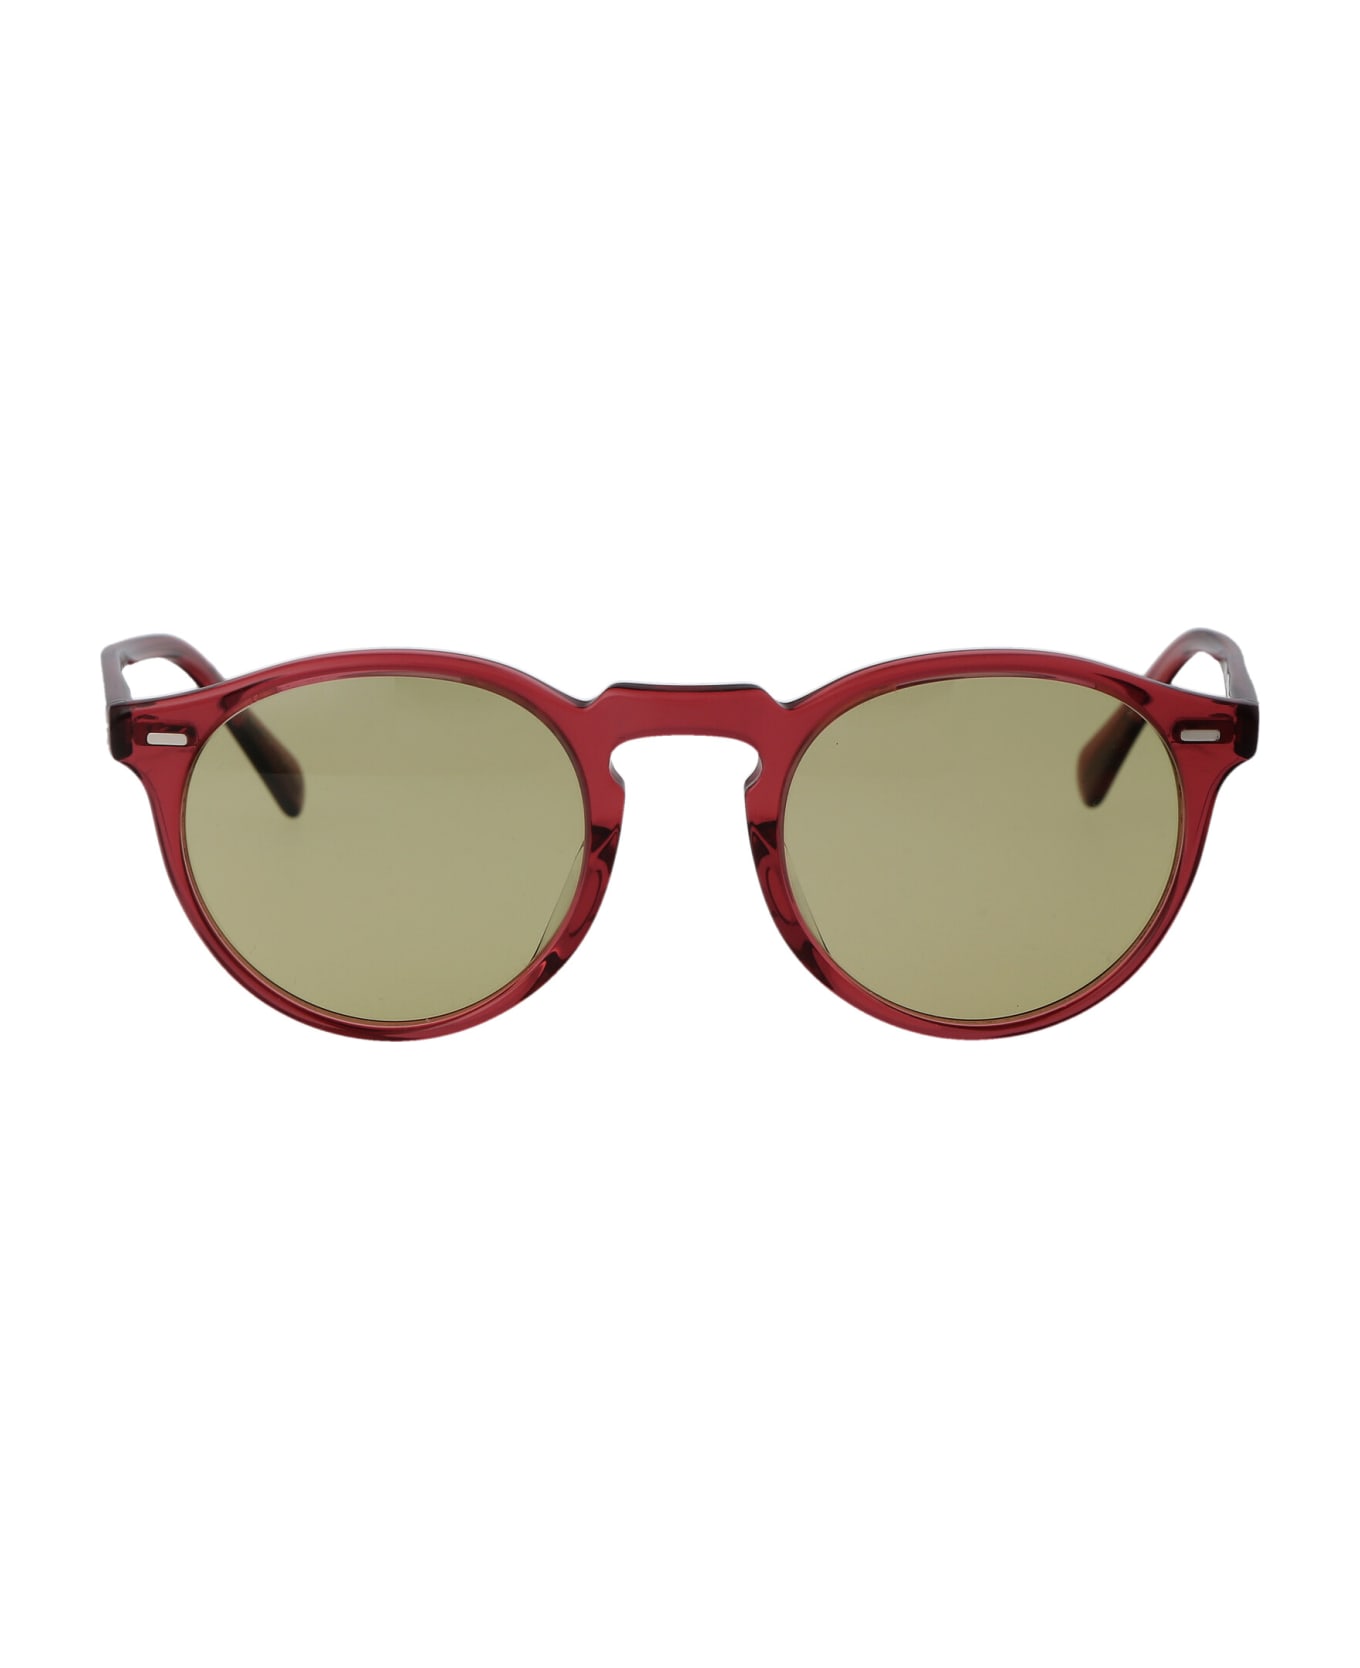 Oliver Peoples Gregory Peck Sun Sunglasses - 17644C Translucent Rust